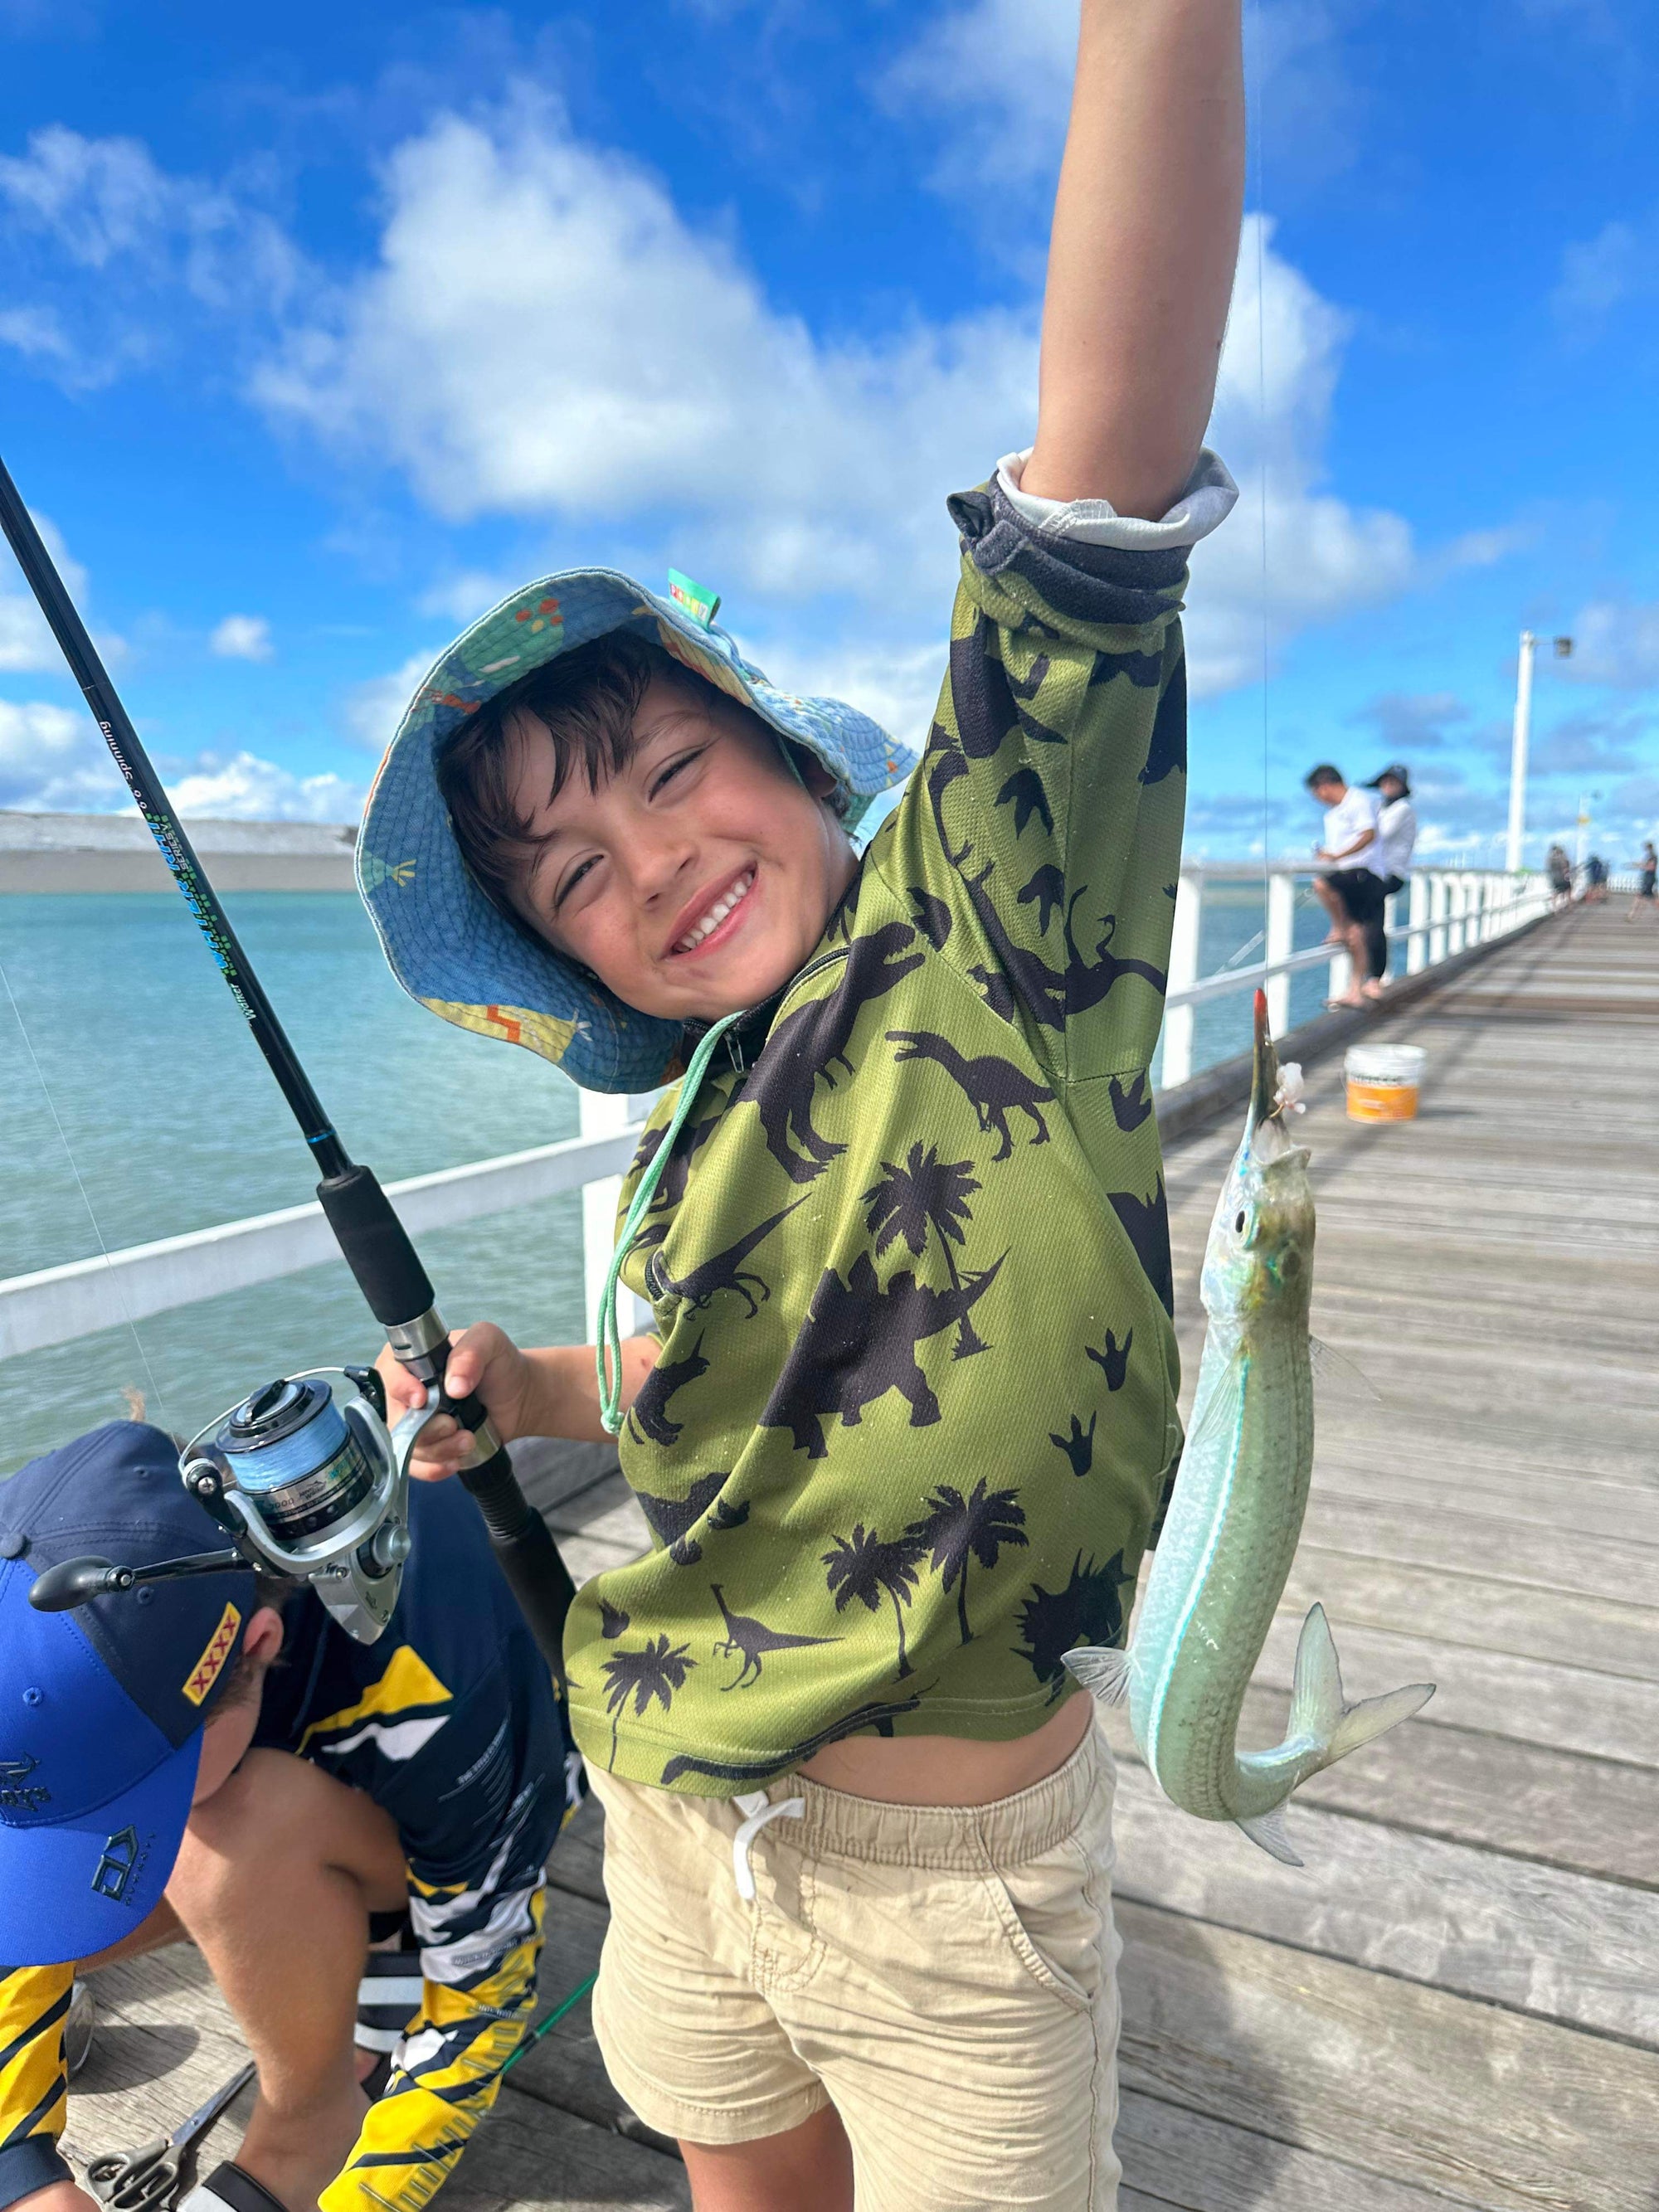 Get the Kids Fishing – School Holiday Fun!